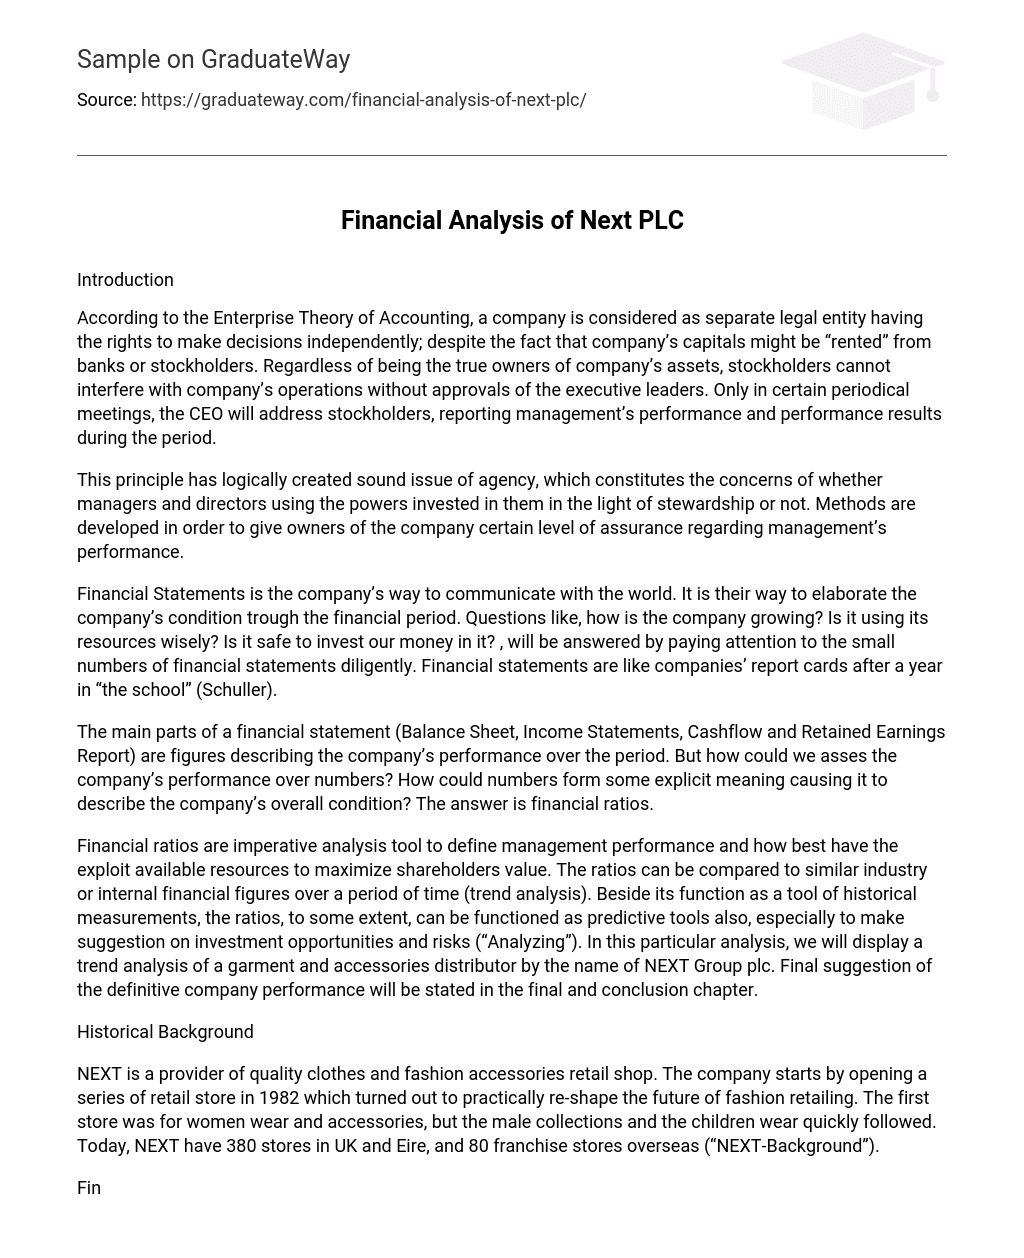 Financial Analysis of Next PLC